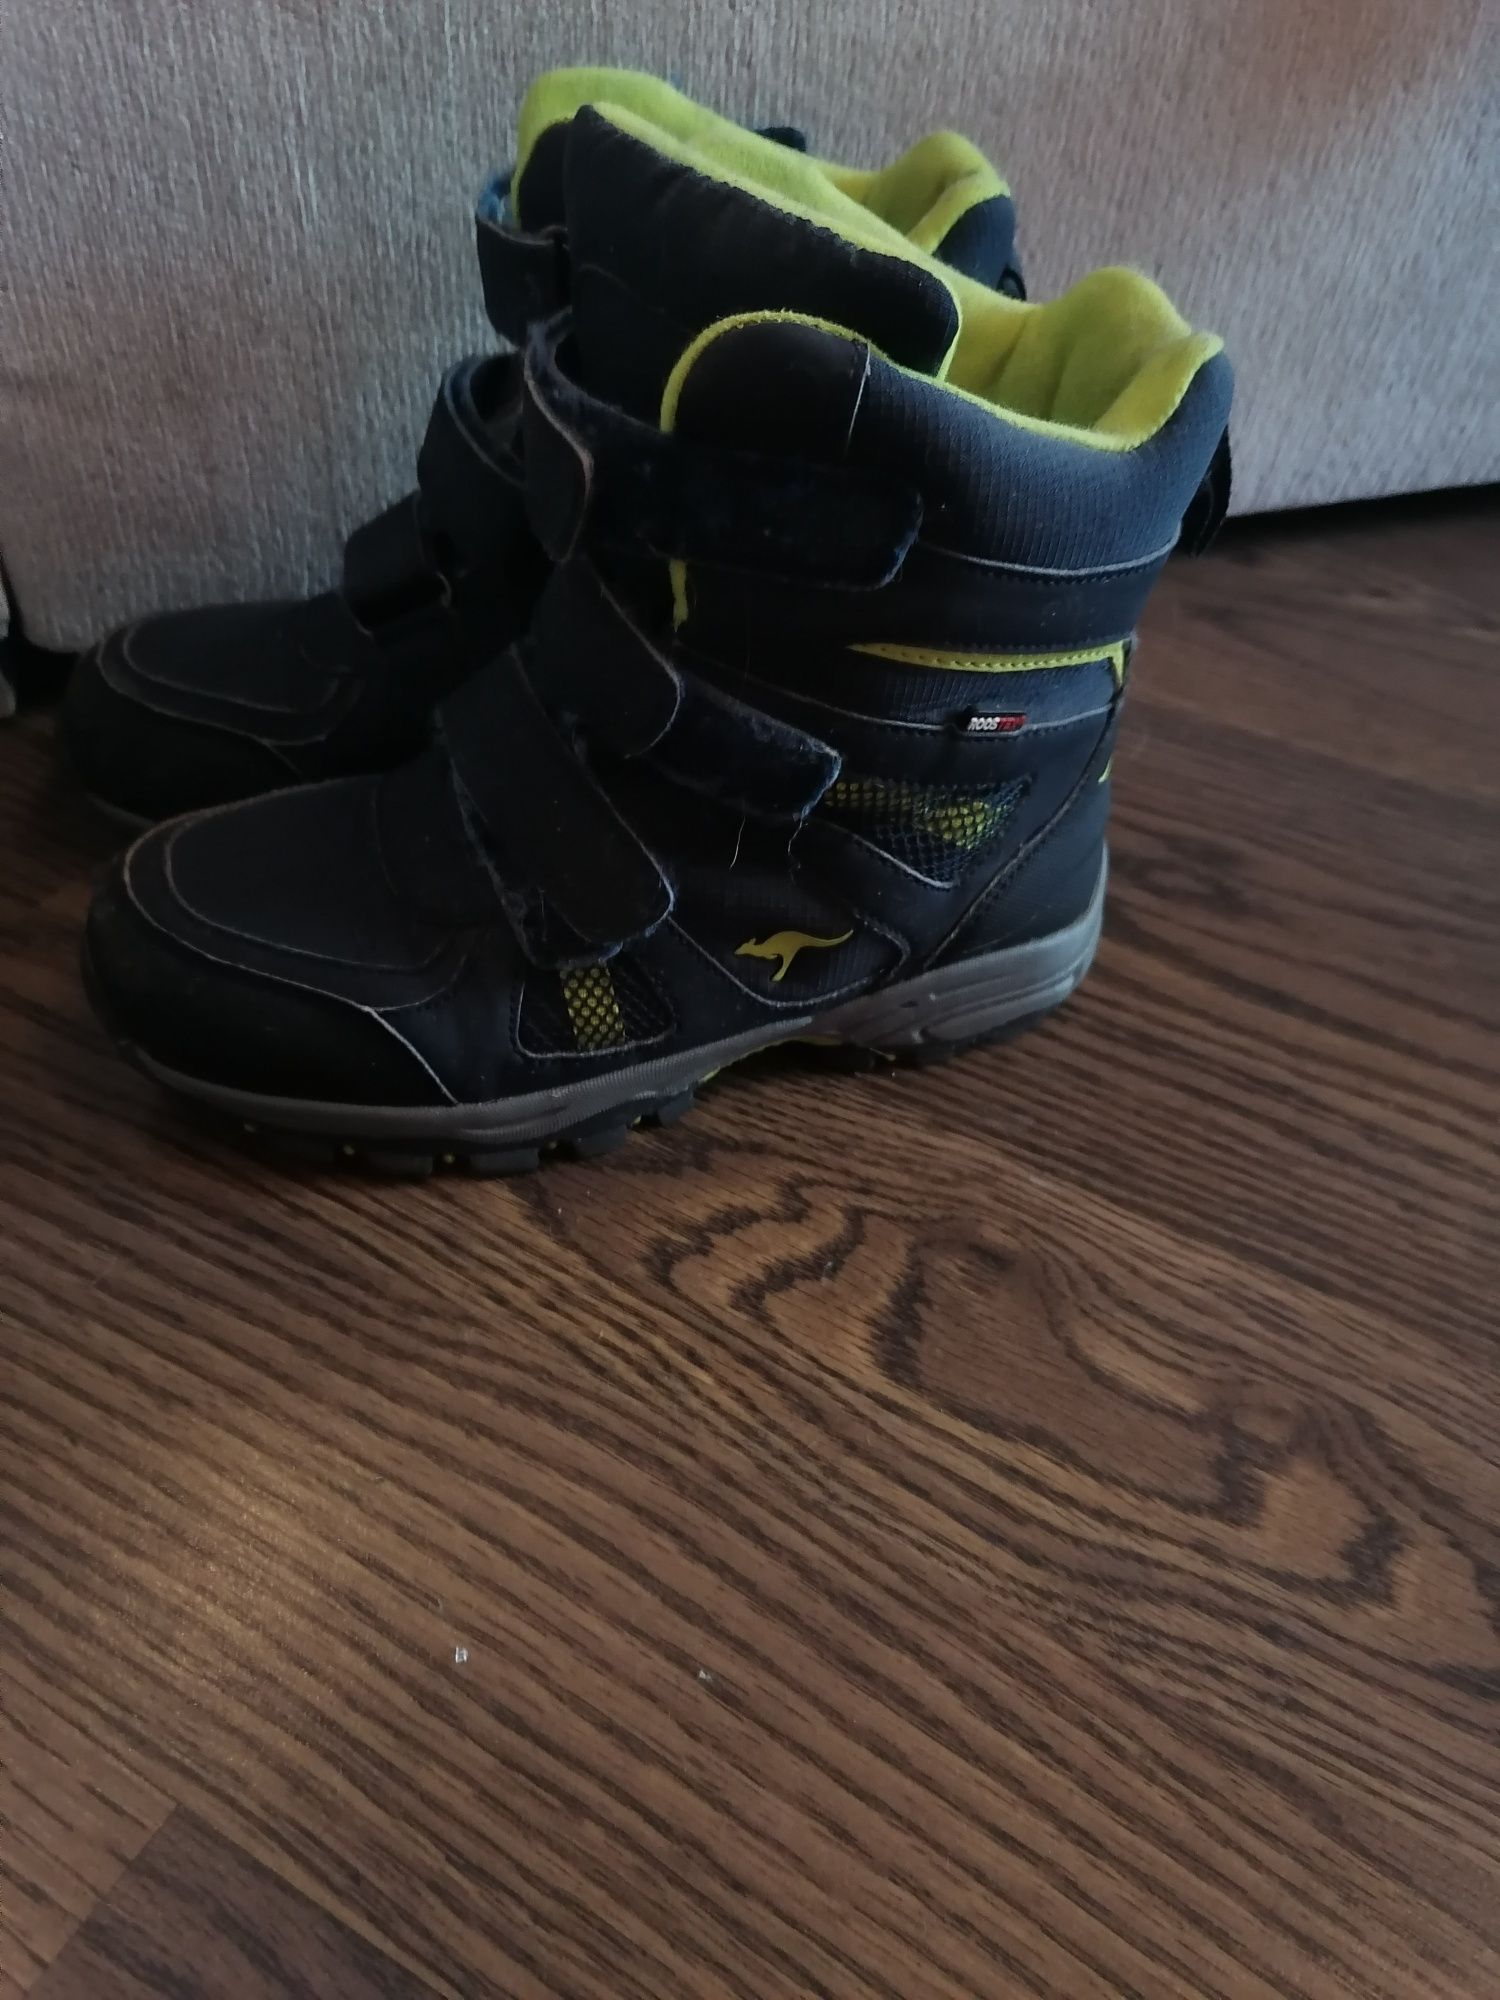 Сапоги сапожки ботинки чоботи чобітки зимові зимние